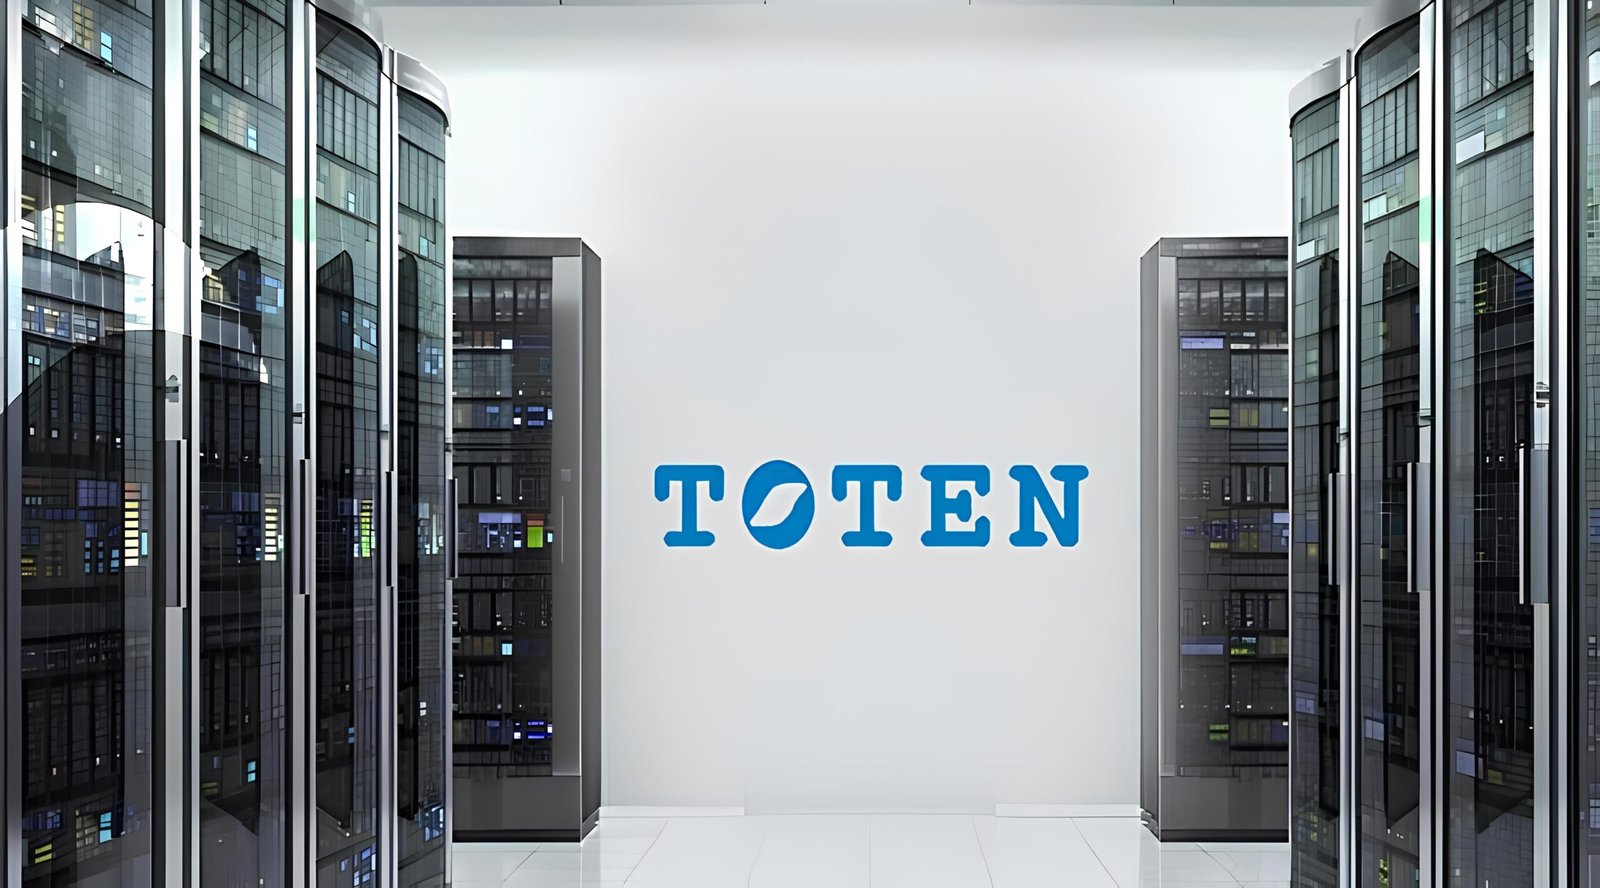 Top Toten Server Rack Supplier in Dubai | Fiber Link Computer Trading LLC